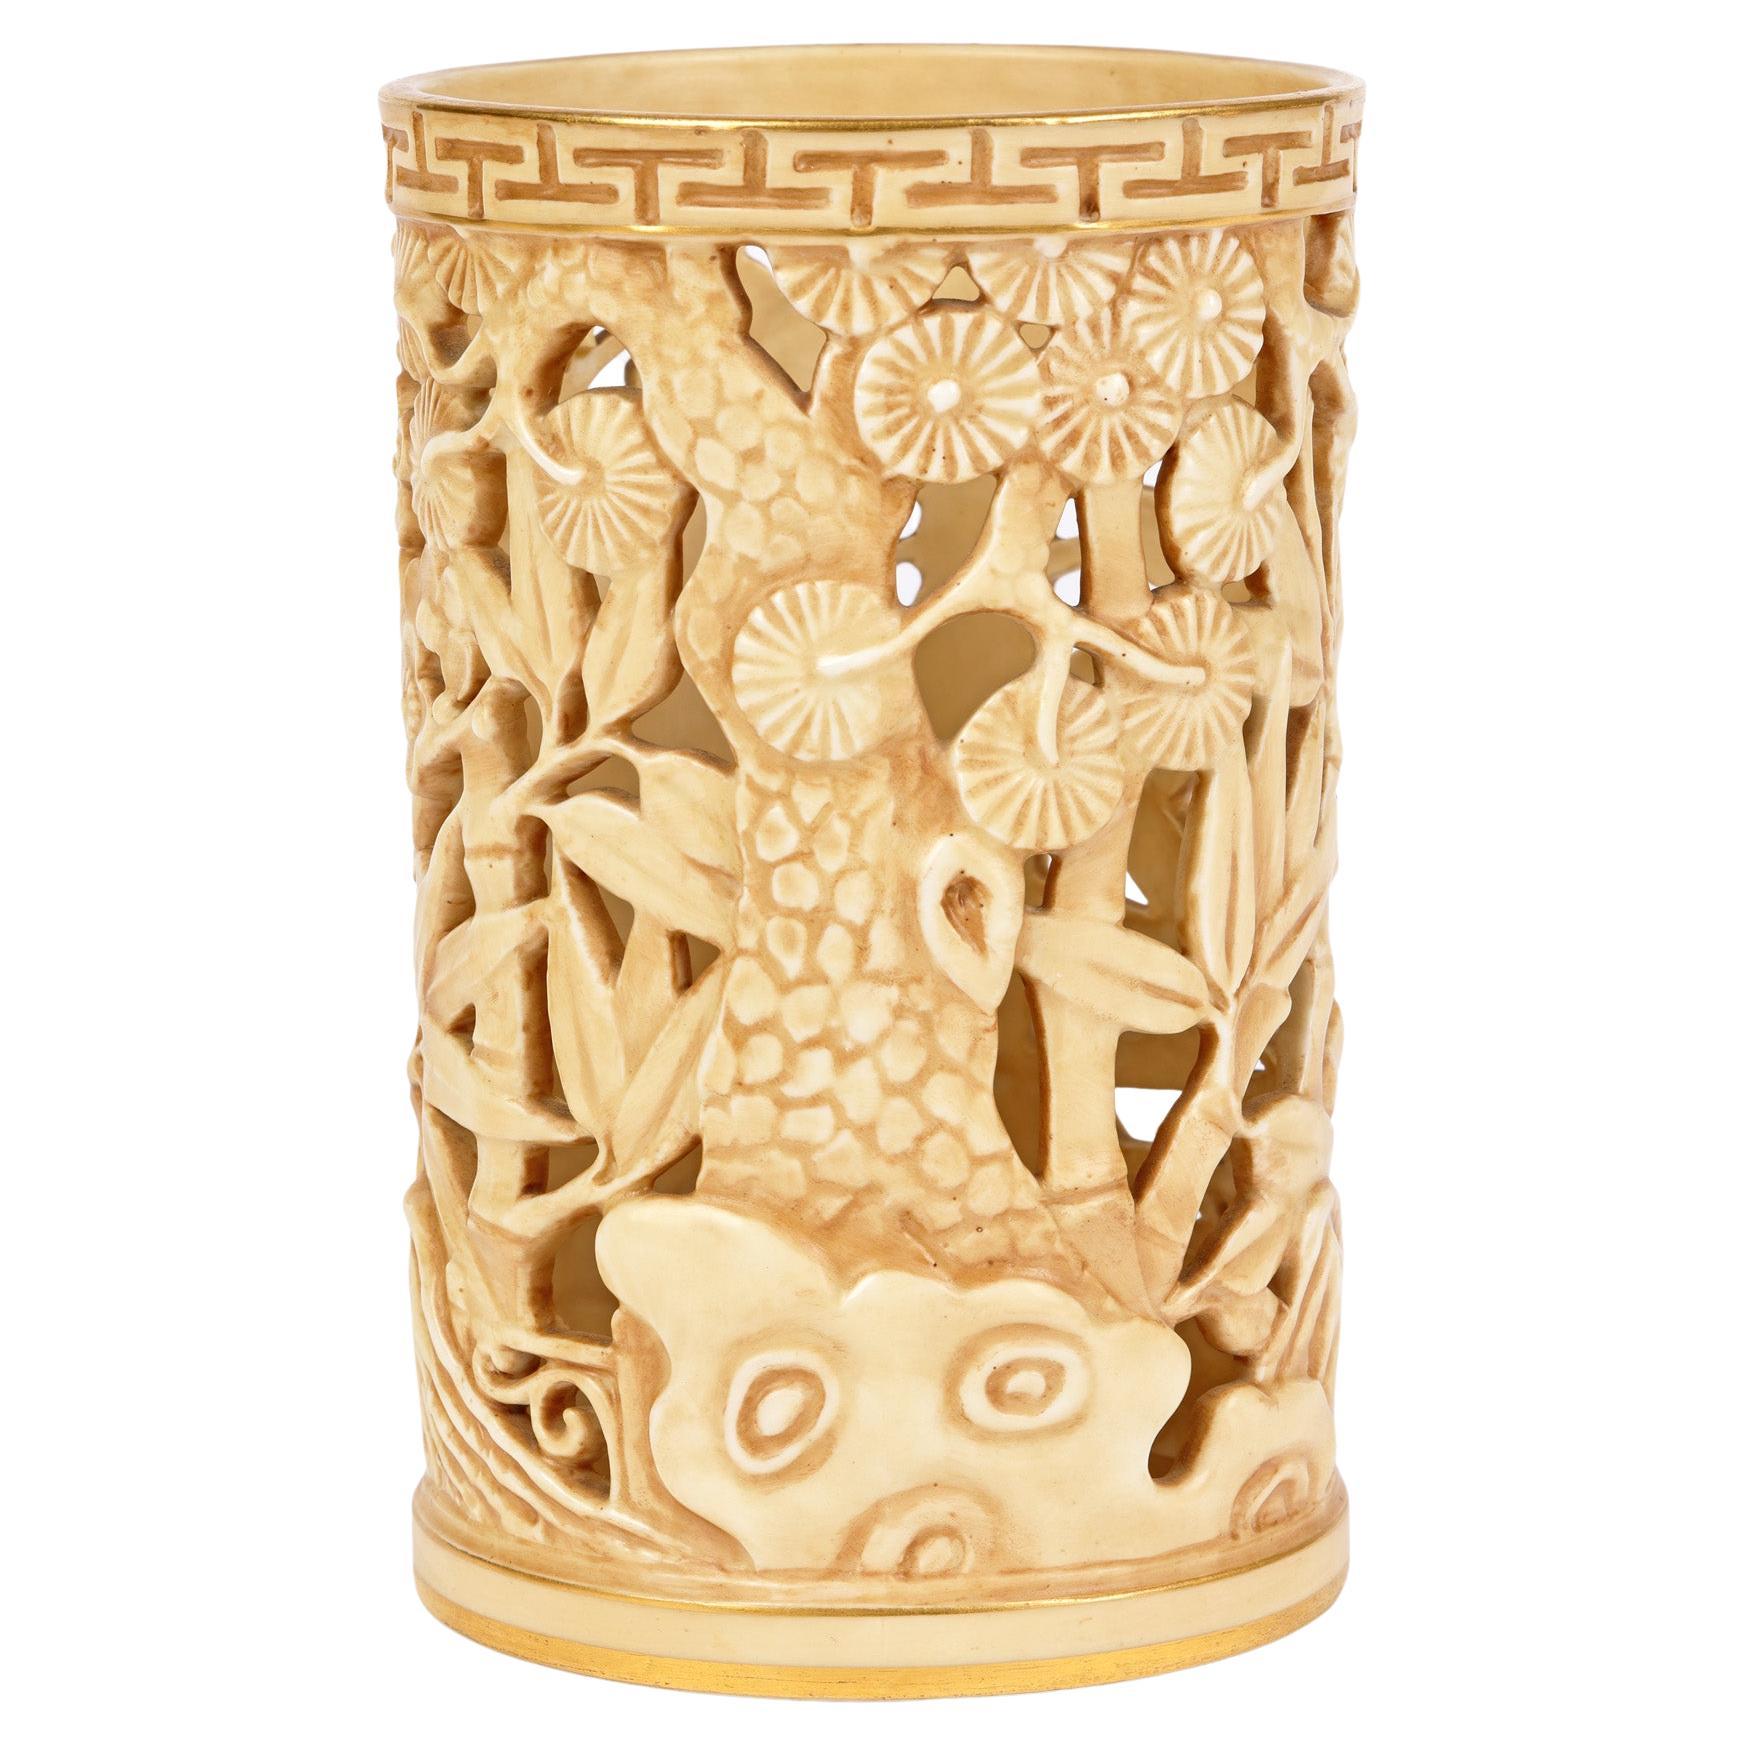 Royal Worcester Aesthetic Movement, durchbrochene orientalische Blush Spill-Vase, Ästhetizismus